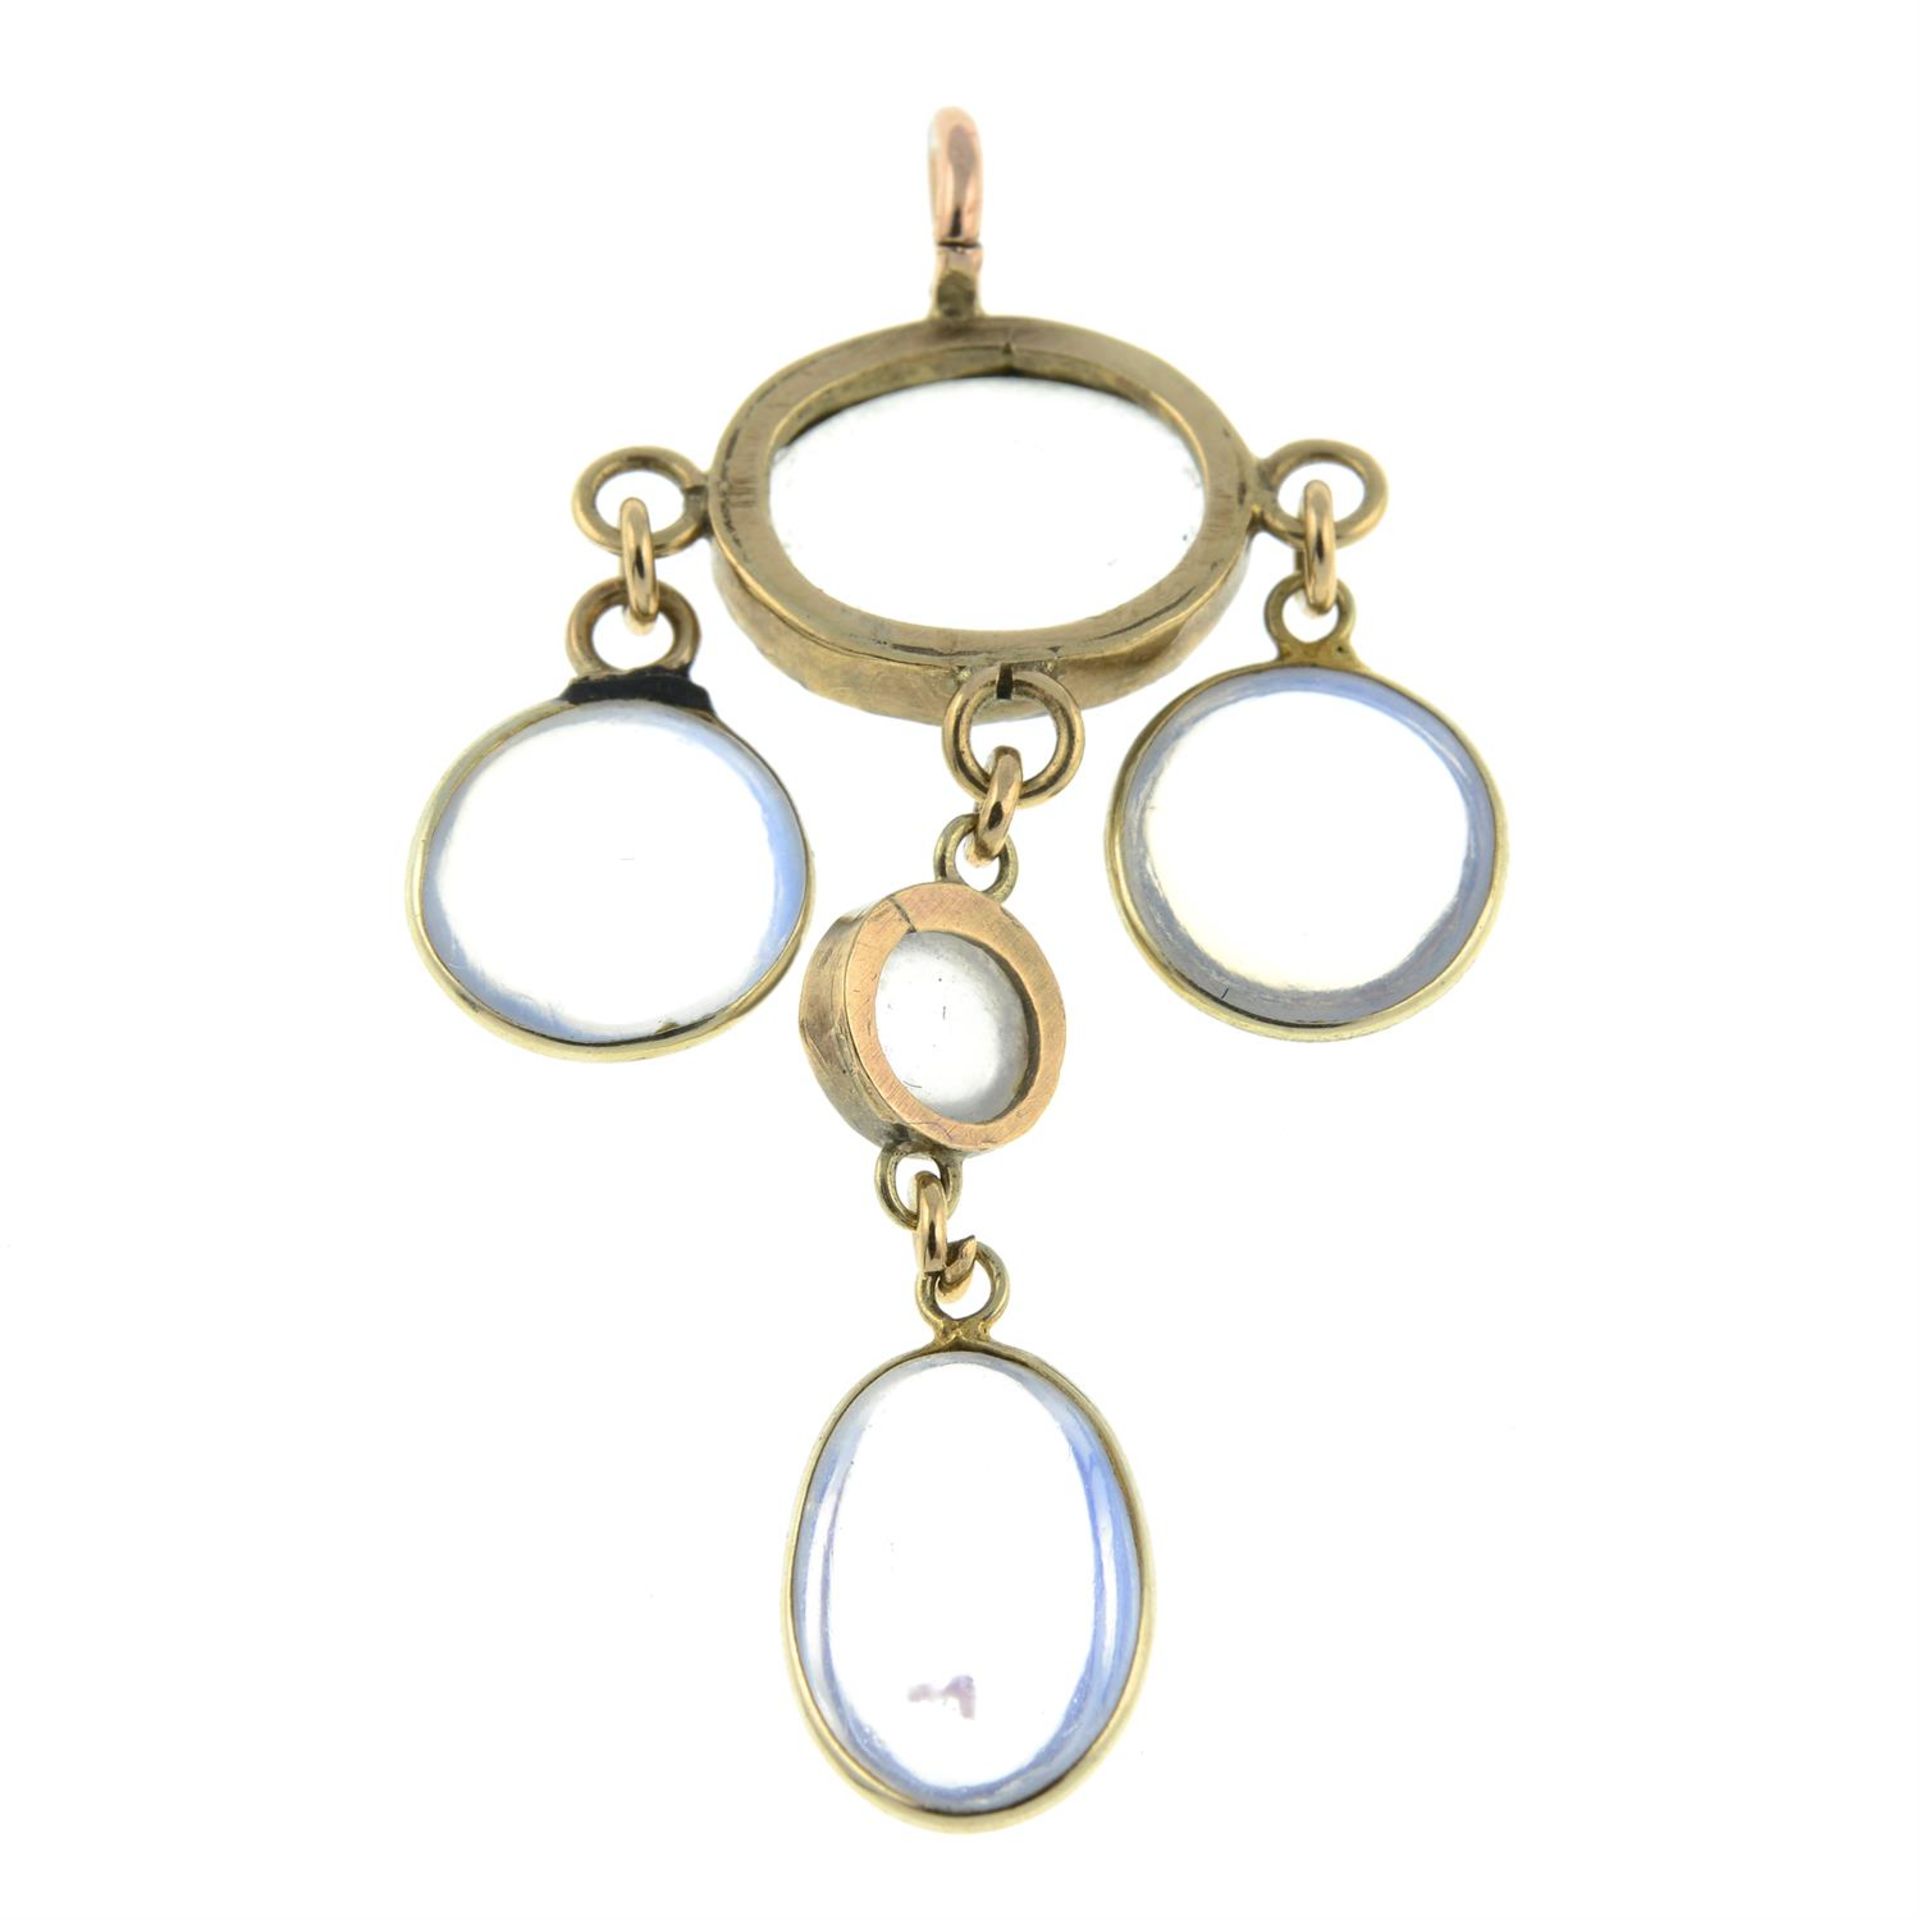 A moonstone pendant. - Image 2 of 2